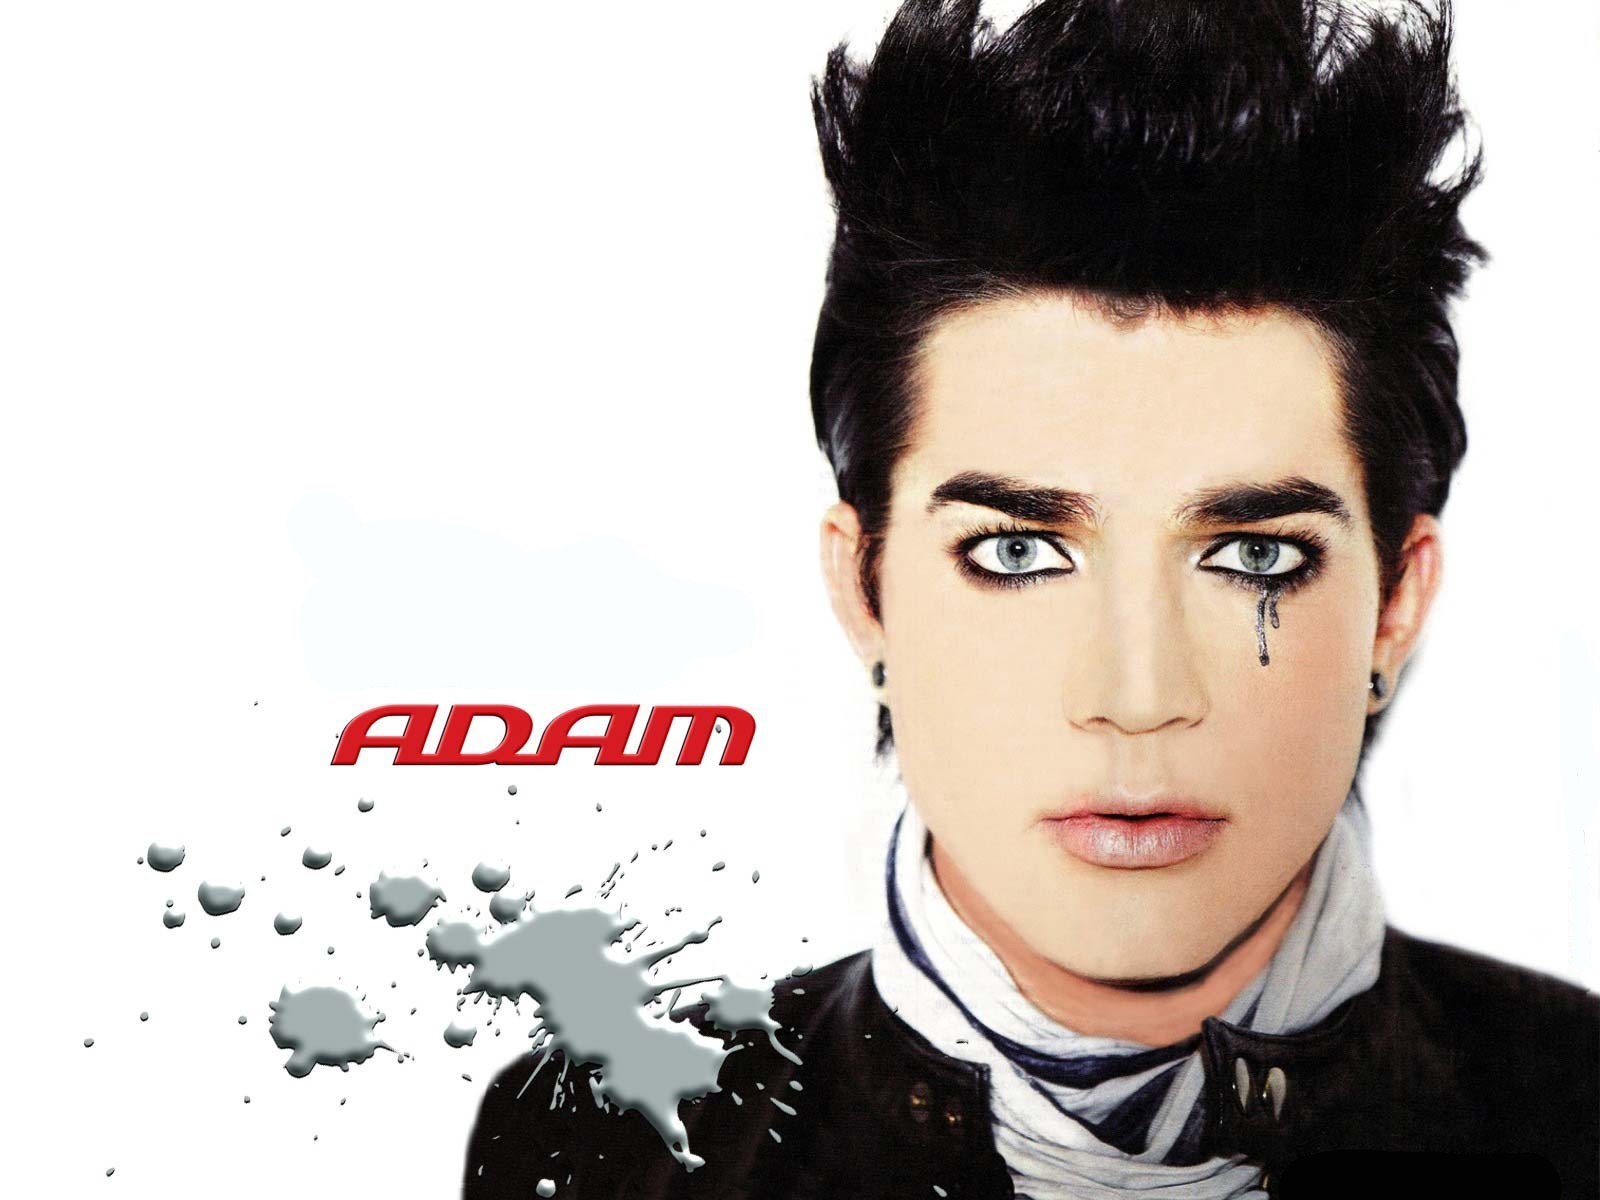 adam wallpaper,haar,gesicht,stirn,augenbraue,album cover